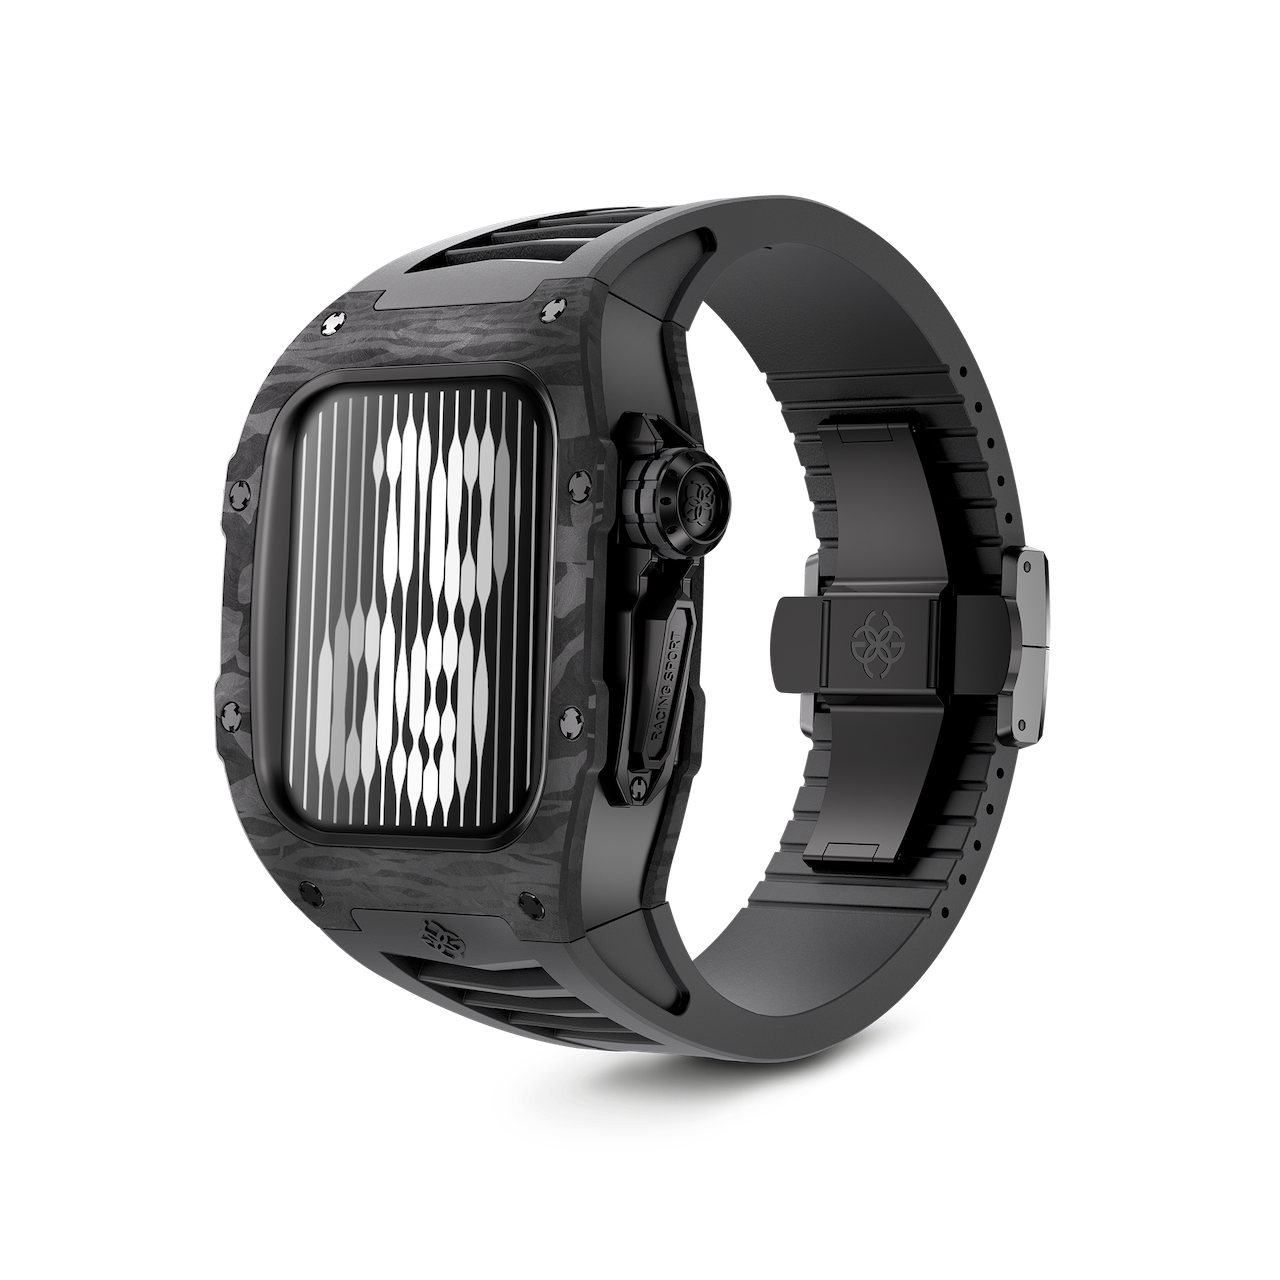 Apple Watch Case - RSCII / Black on Black